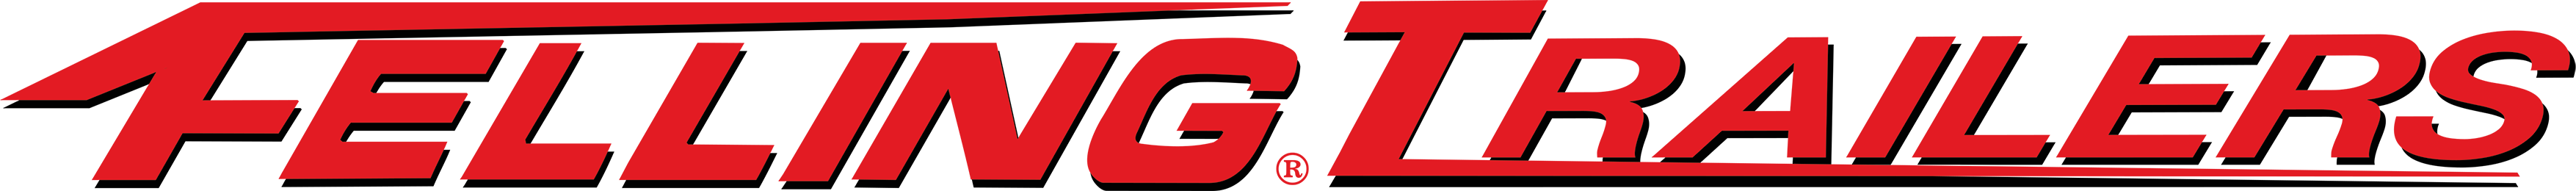 Felling Trailers Logo Red